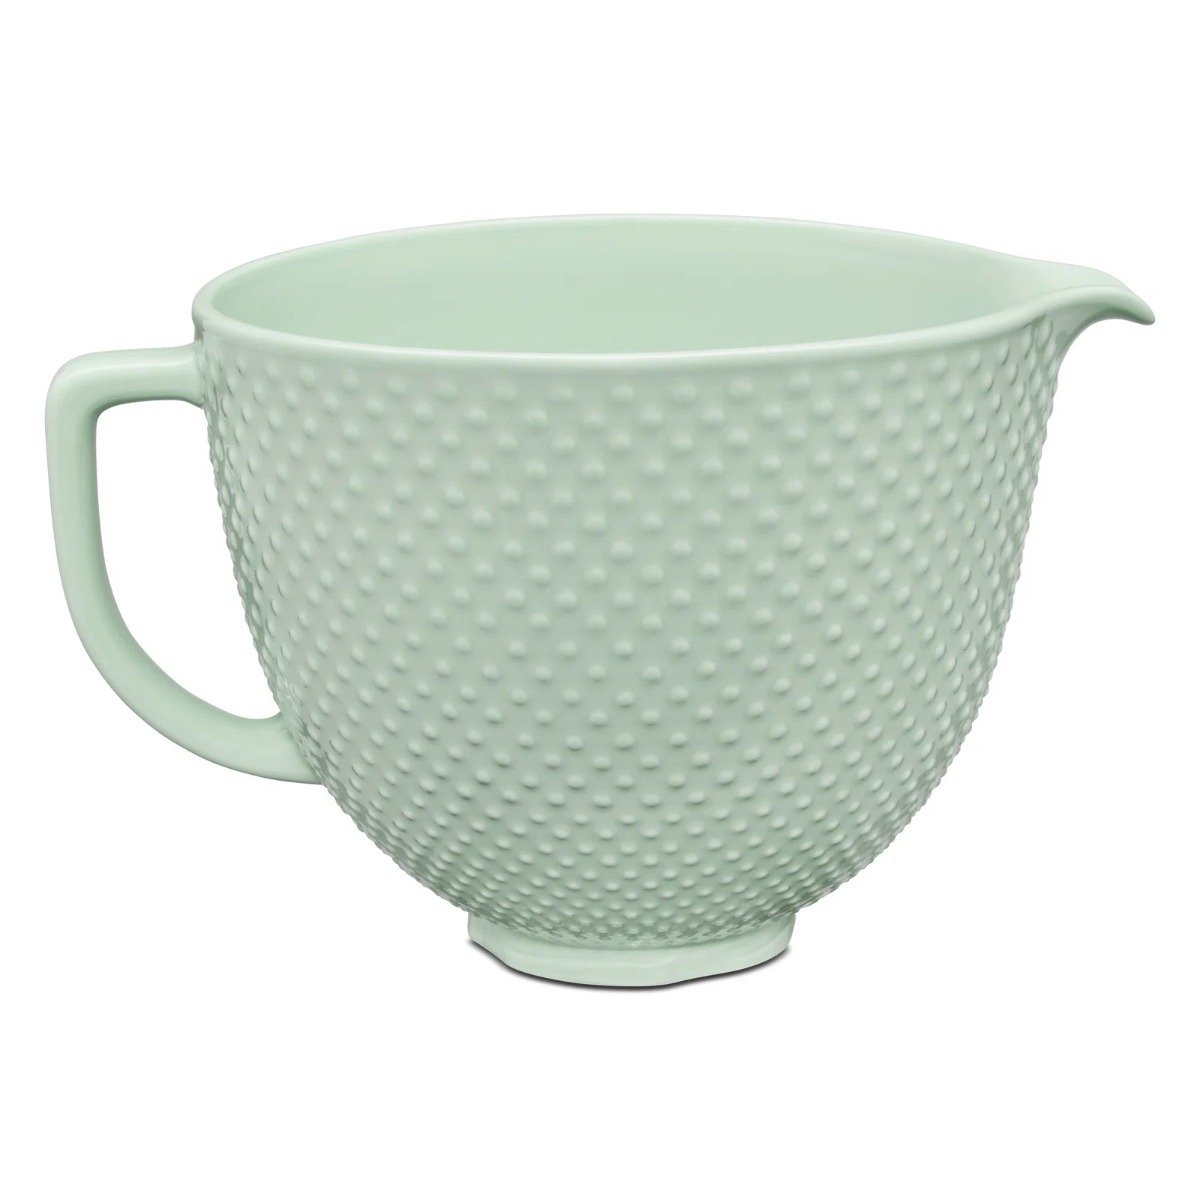 KitchenAid 5-Quart Dew Drop Ceramic Bowl | Fits 4.5-Quart & 5-Quart KitchenAid Tilt-Head Stand Mixers - image 1 of 6